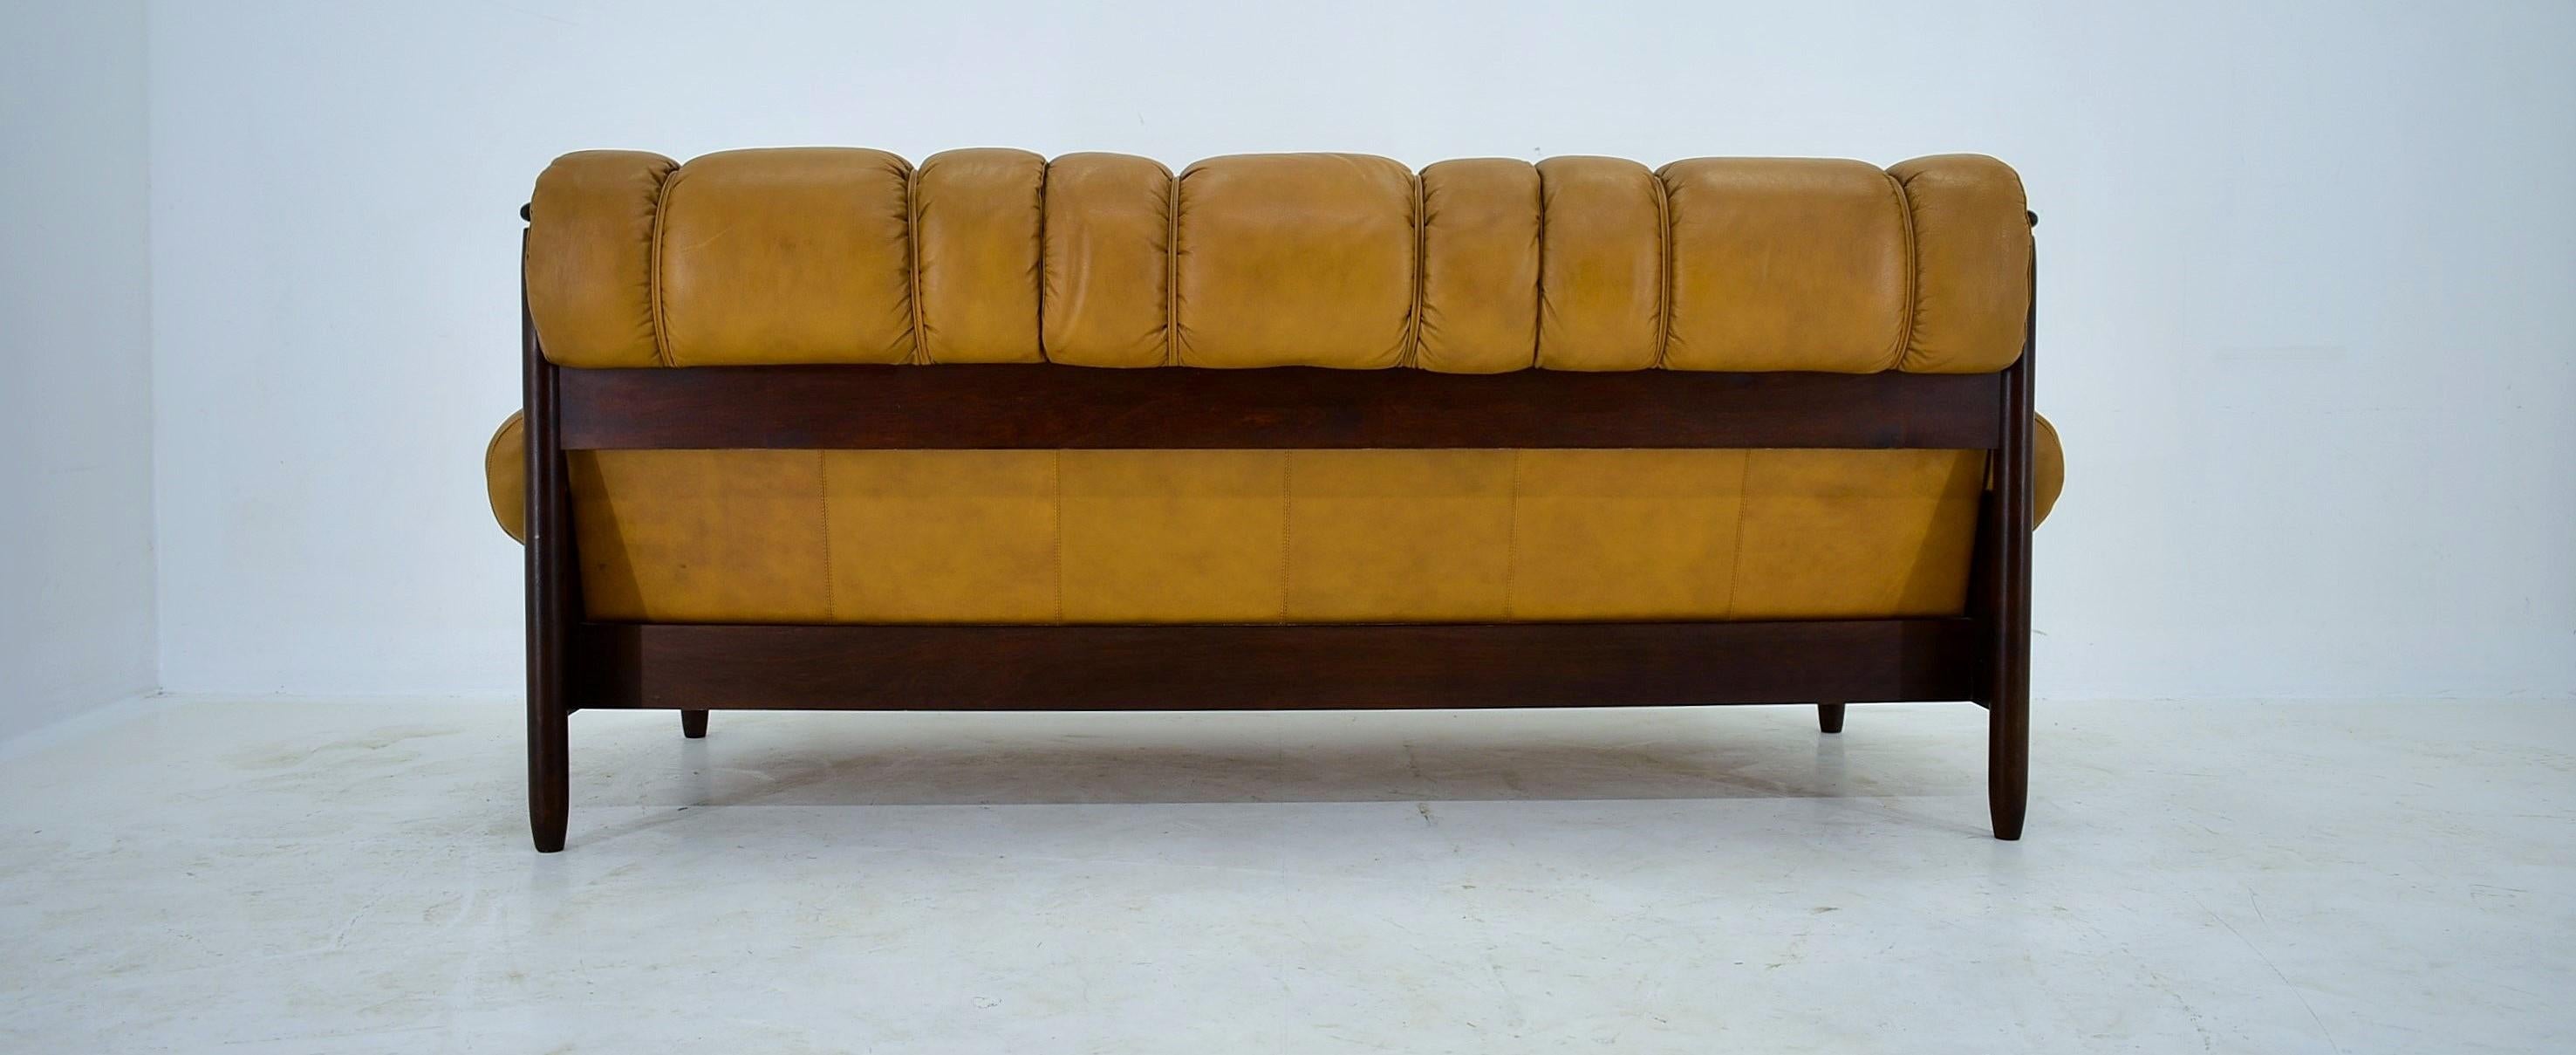 1960s Three-Seat Leather Sofa, Czechoslovakia For Sale 14